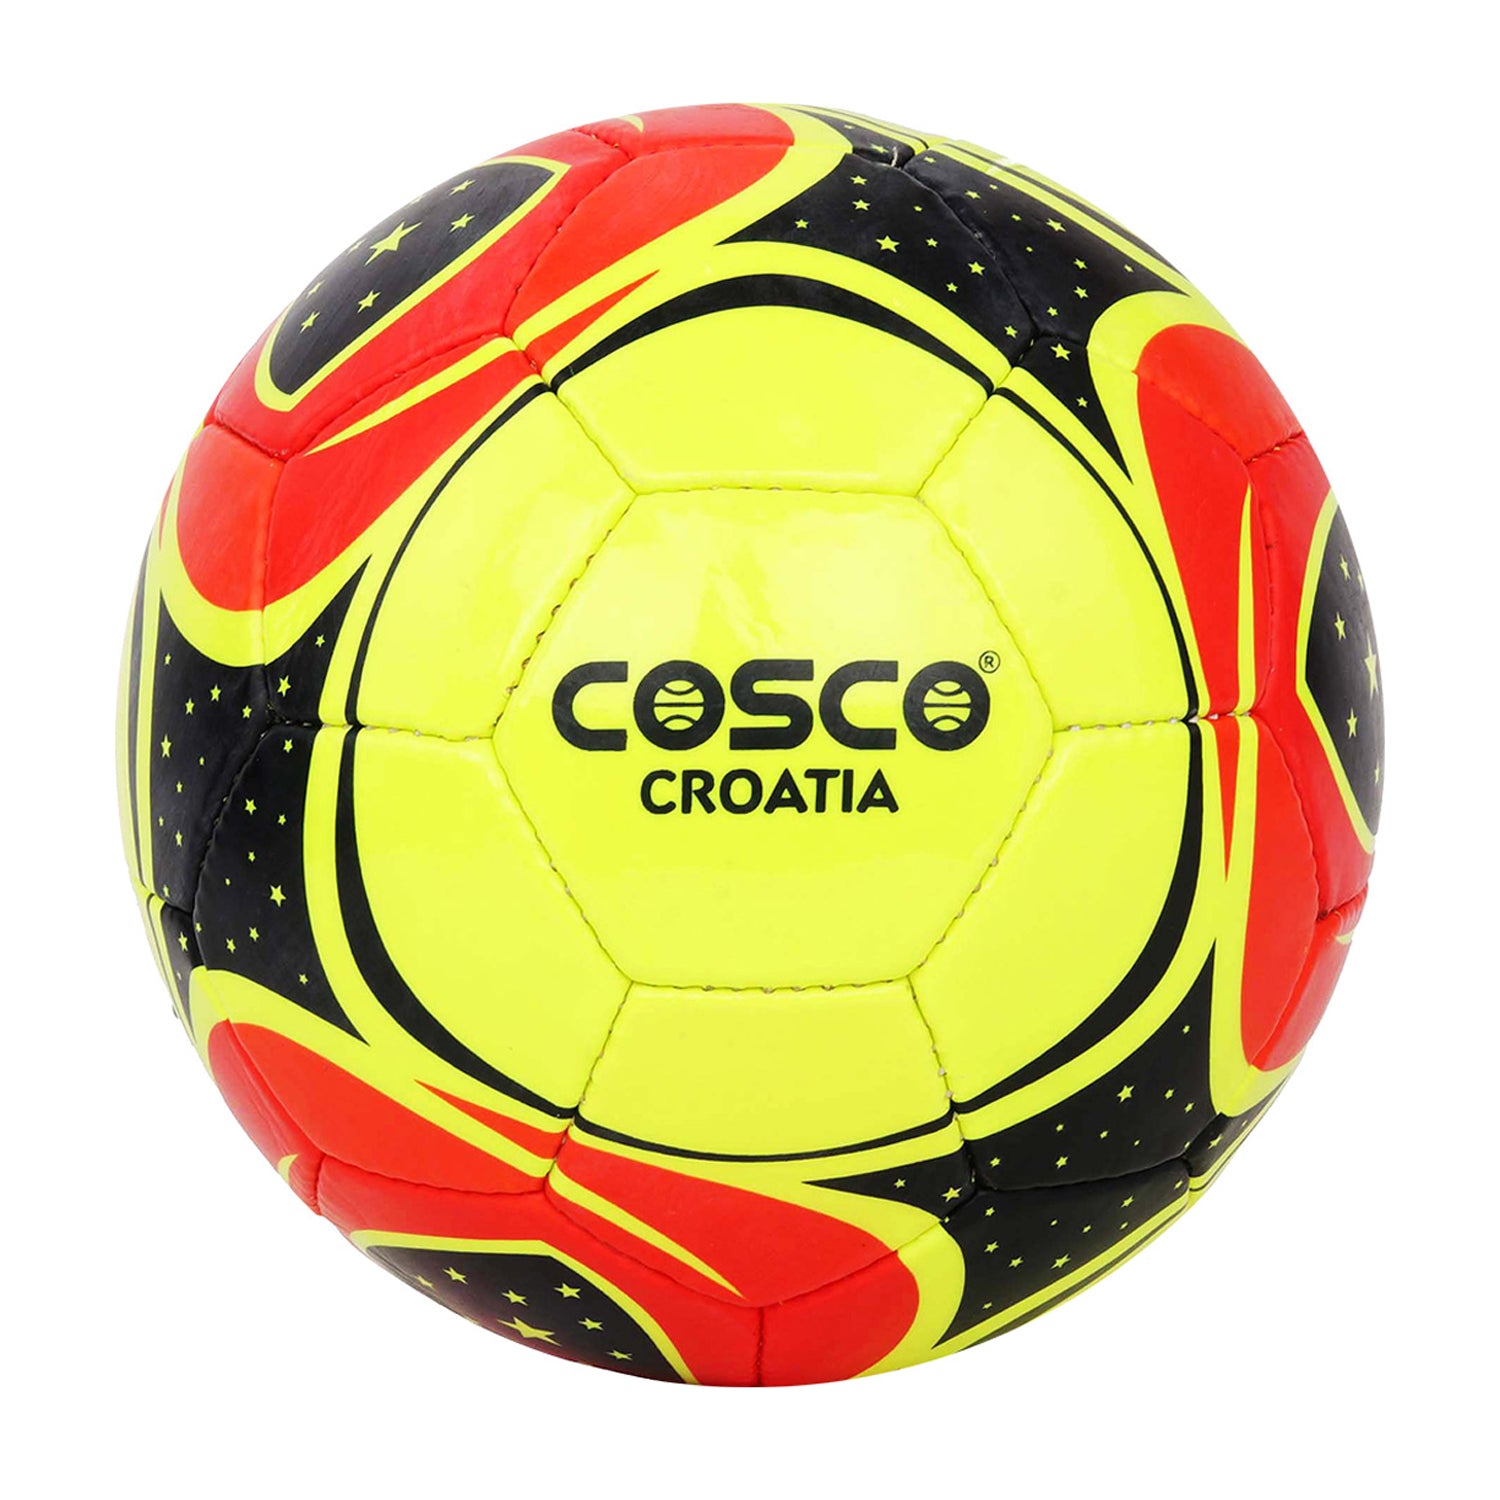 Cosco Croatia Football, Size 4 (Assorted) - Best Price online Prokicksports.com